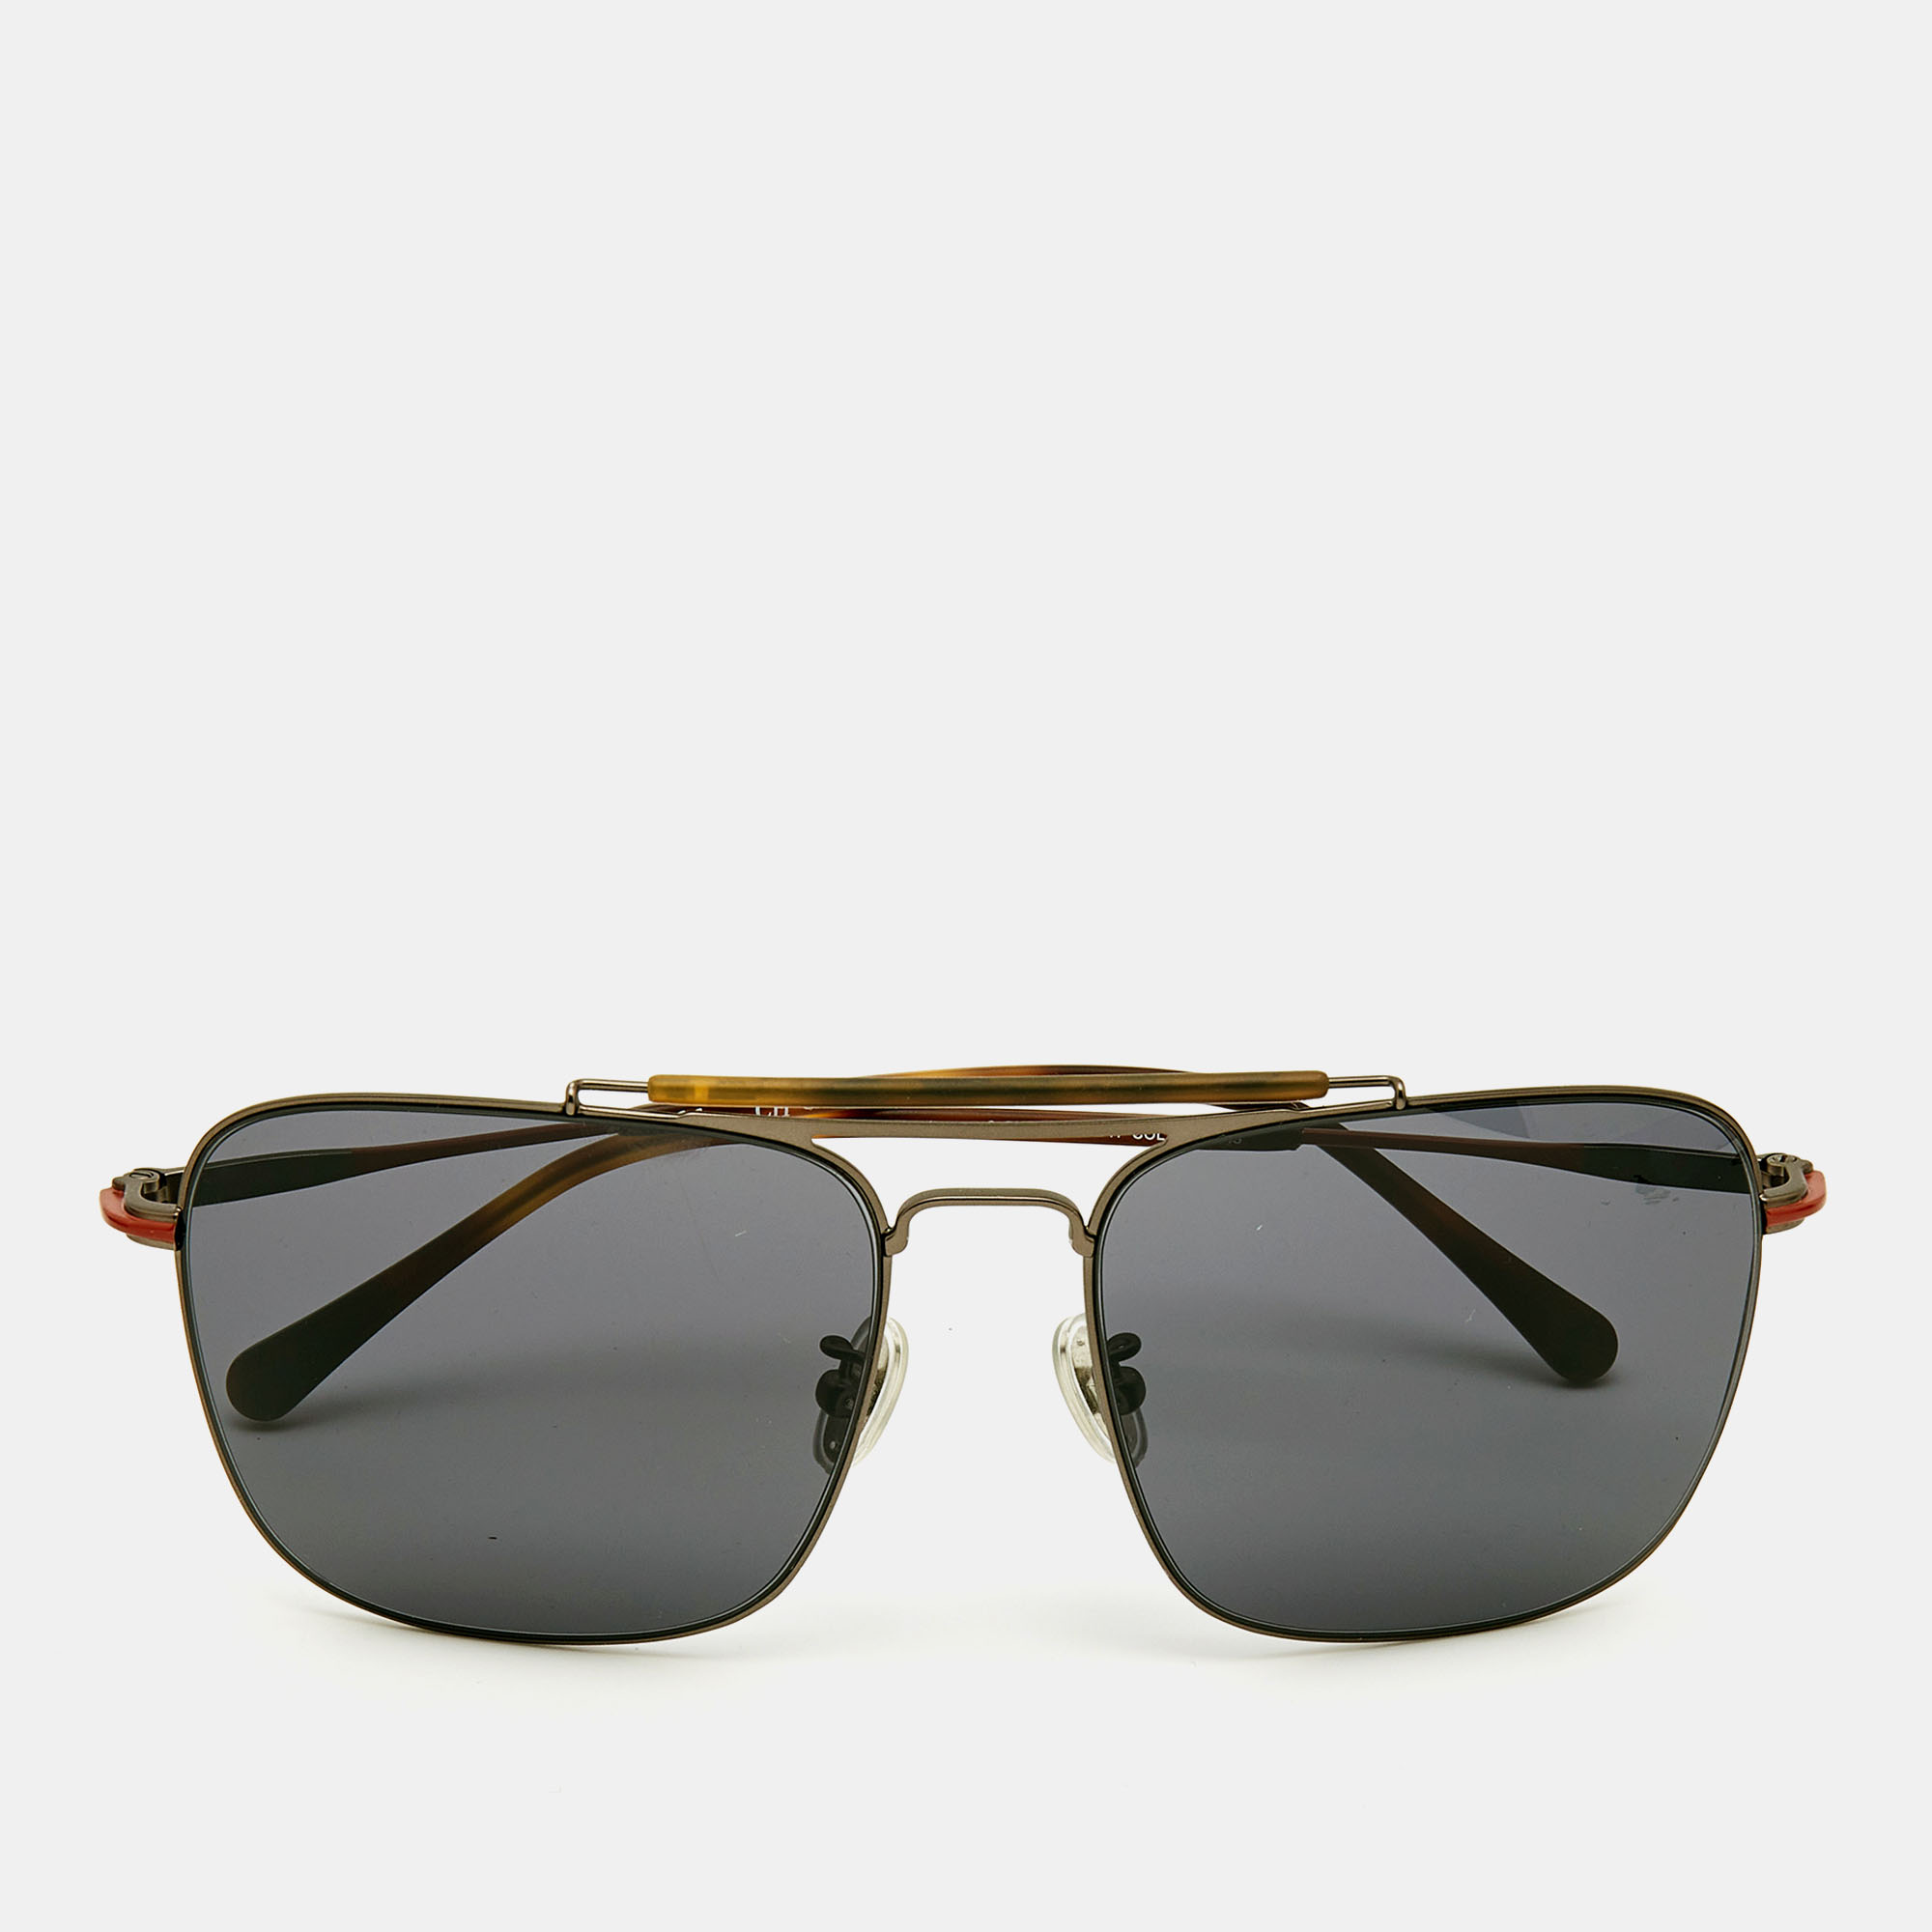 Carolina Herrera Black/Red Square Sunglasses